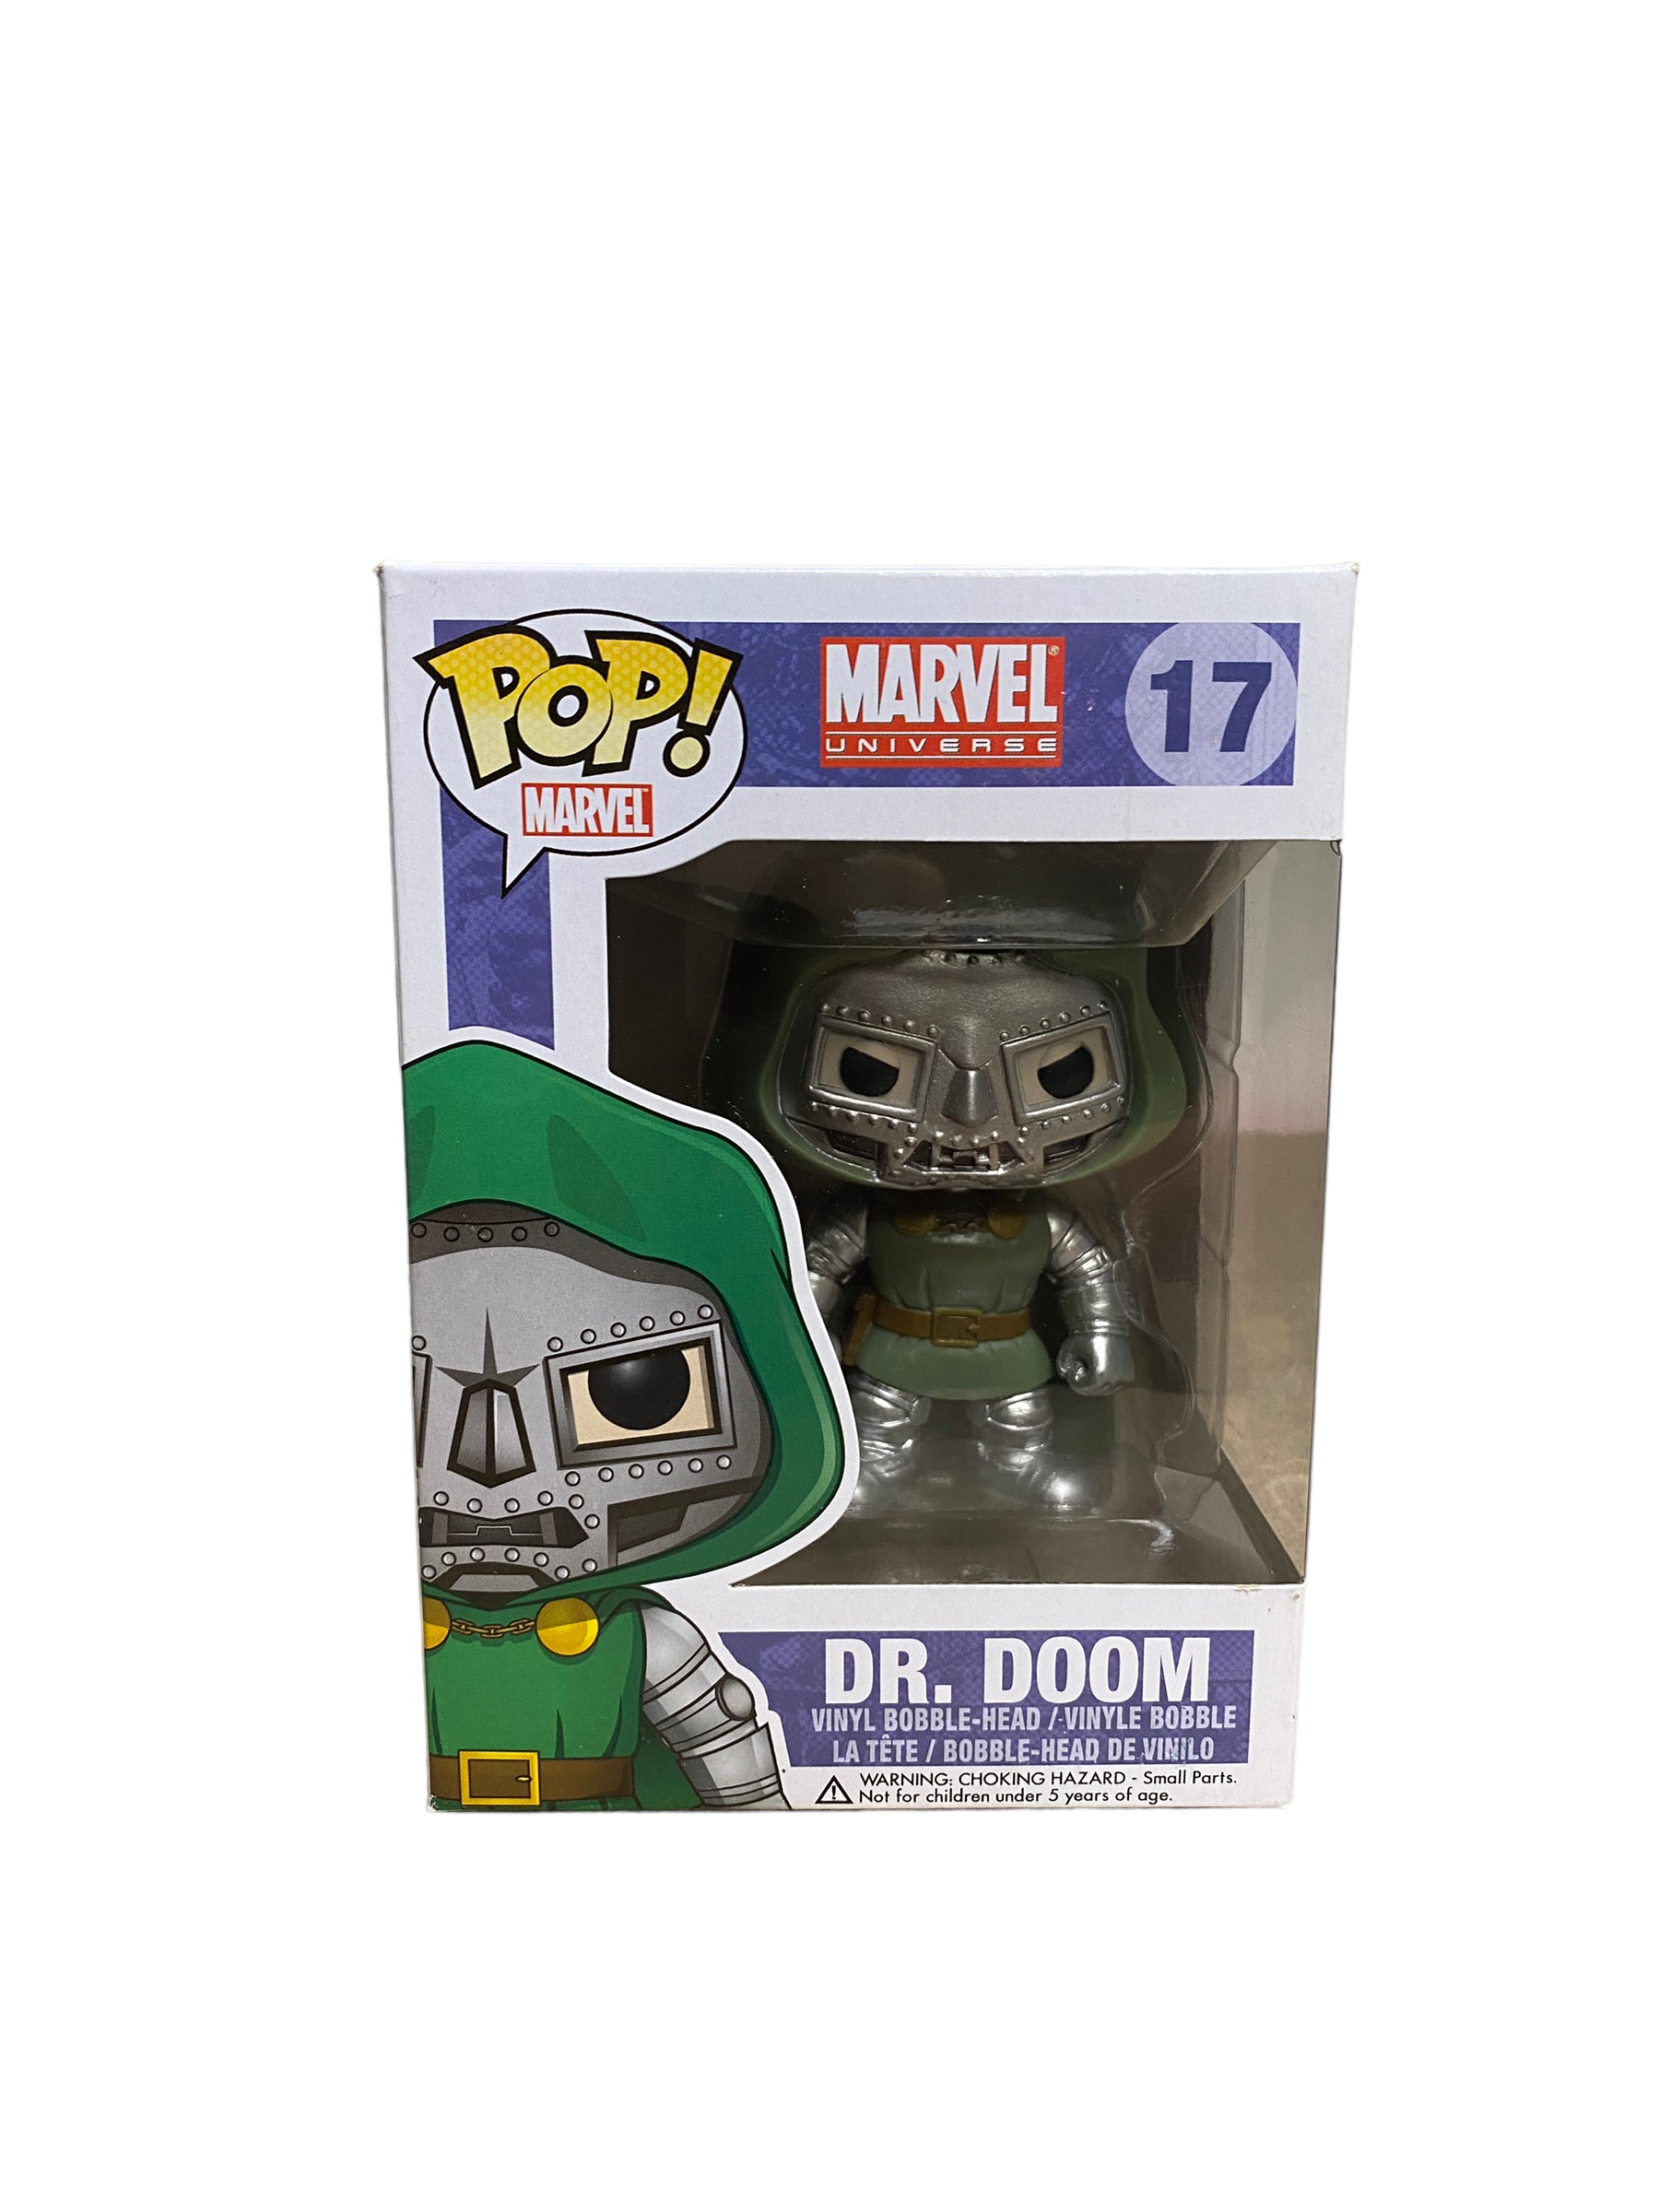 Dr Doom #17 Funko Pop! - Marvel Universe - 2013 Pop! - Condition 7.5/10